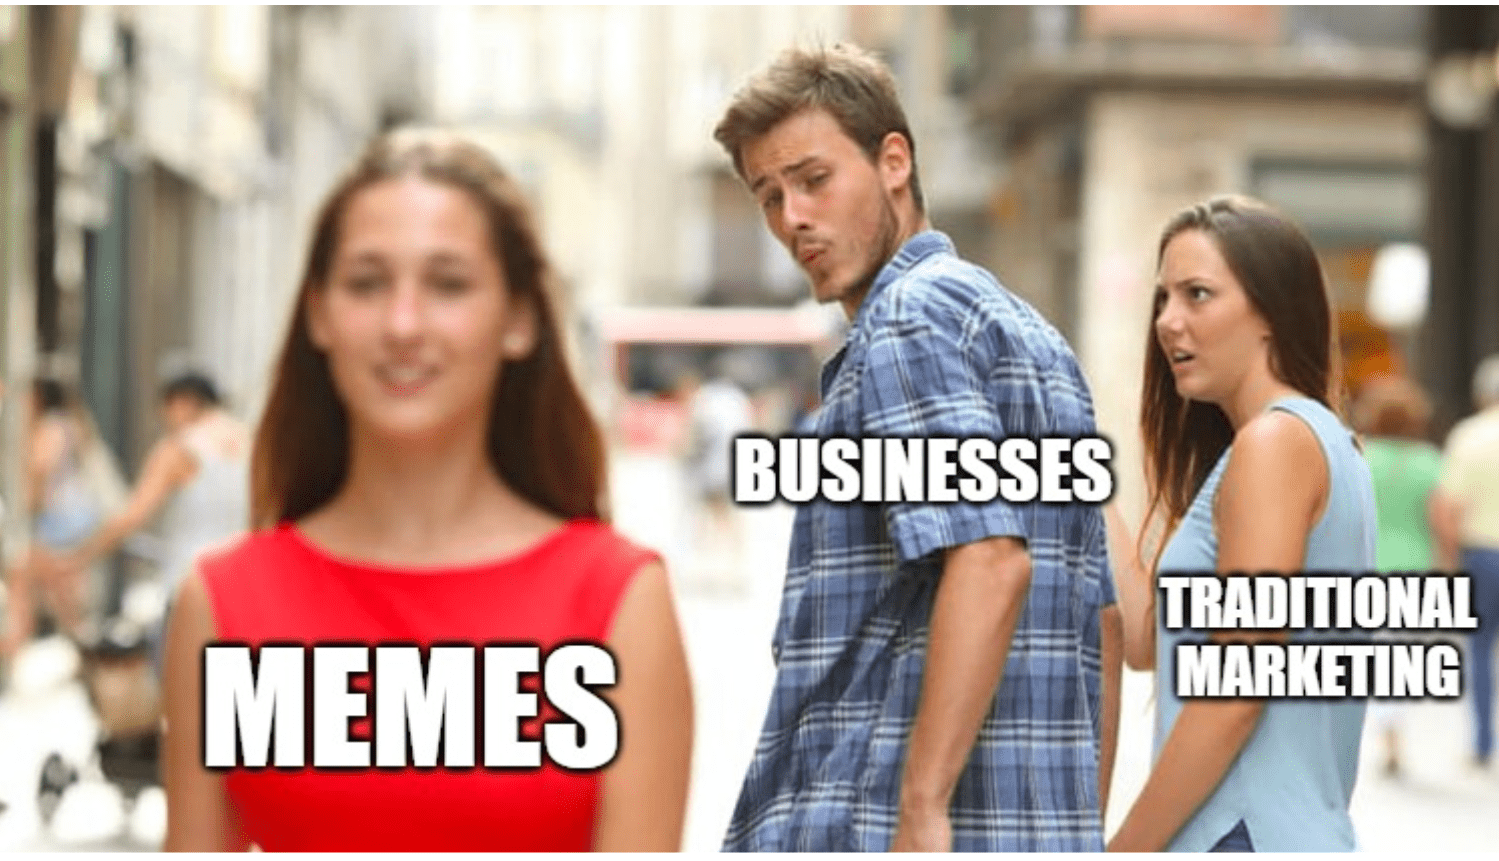 try a new approach - meme marketing